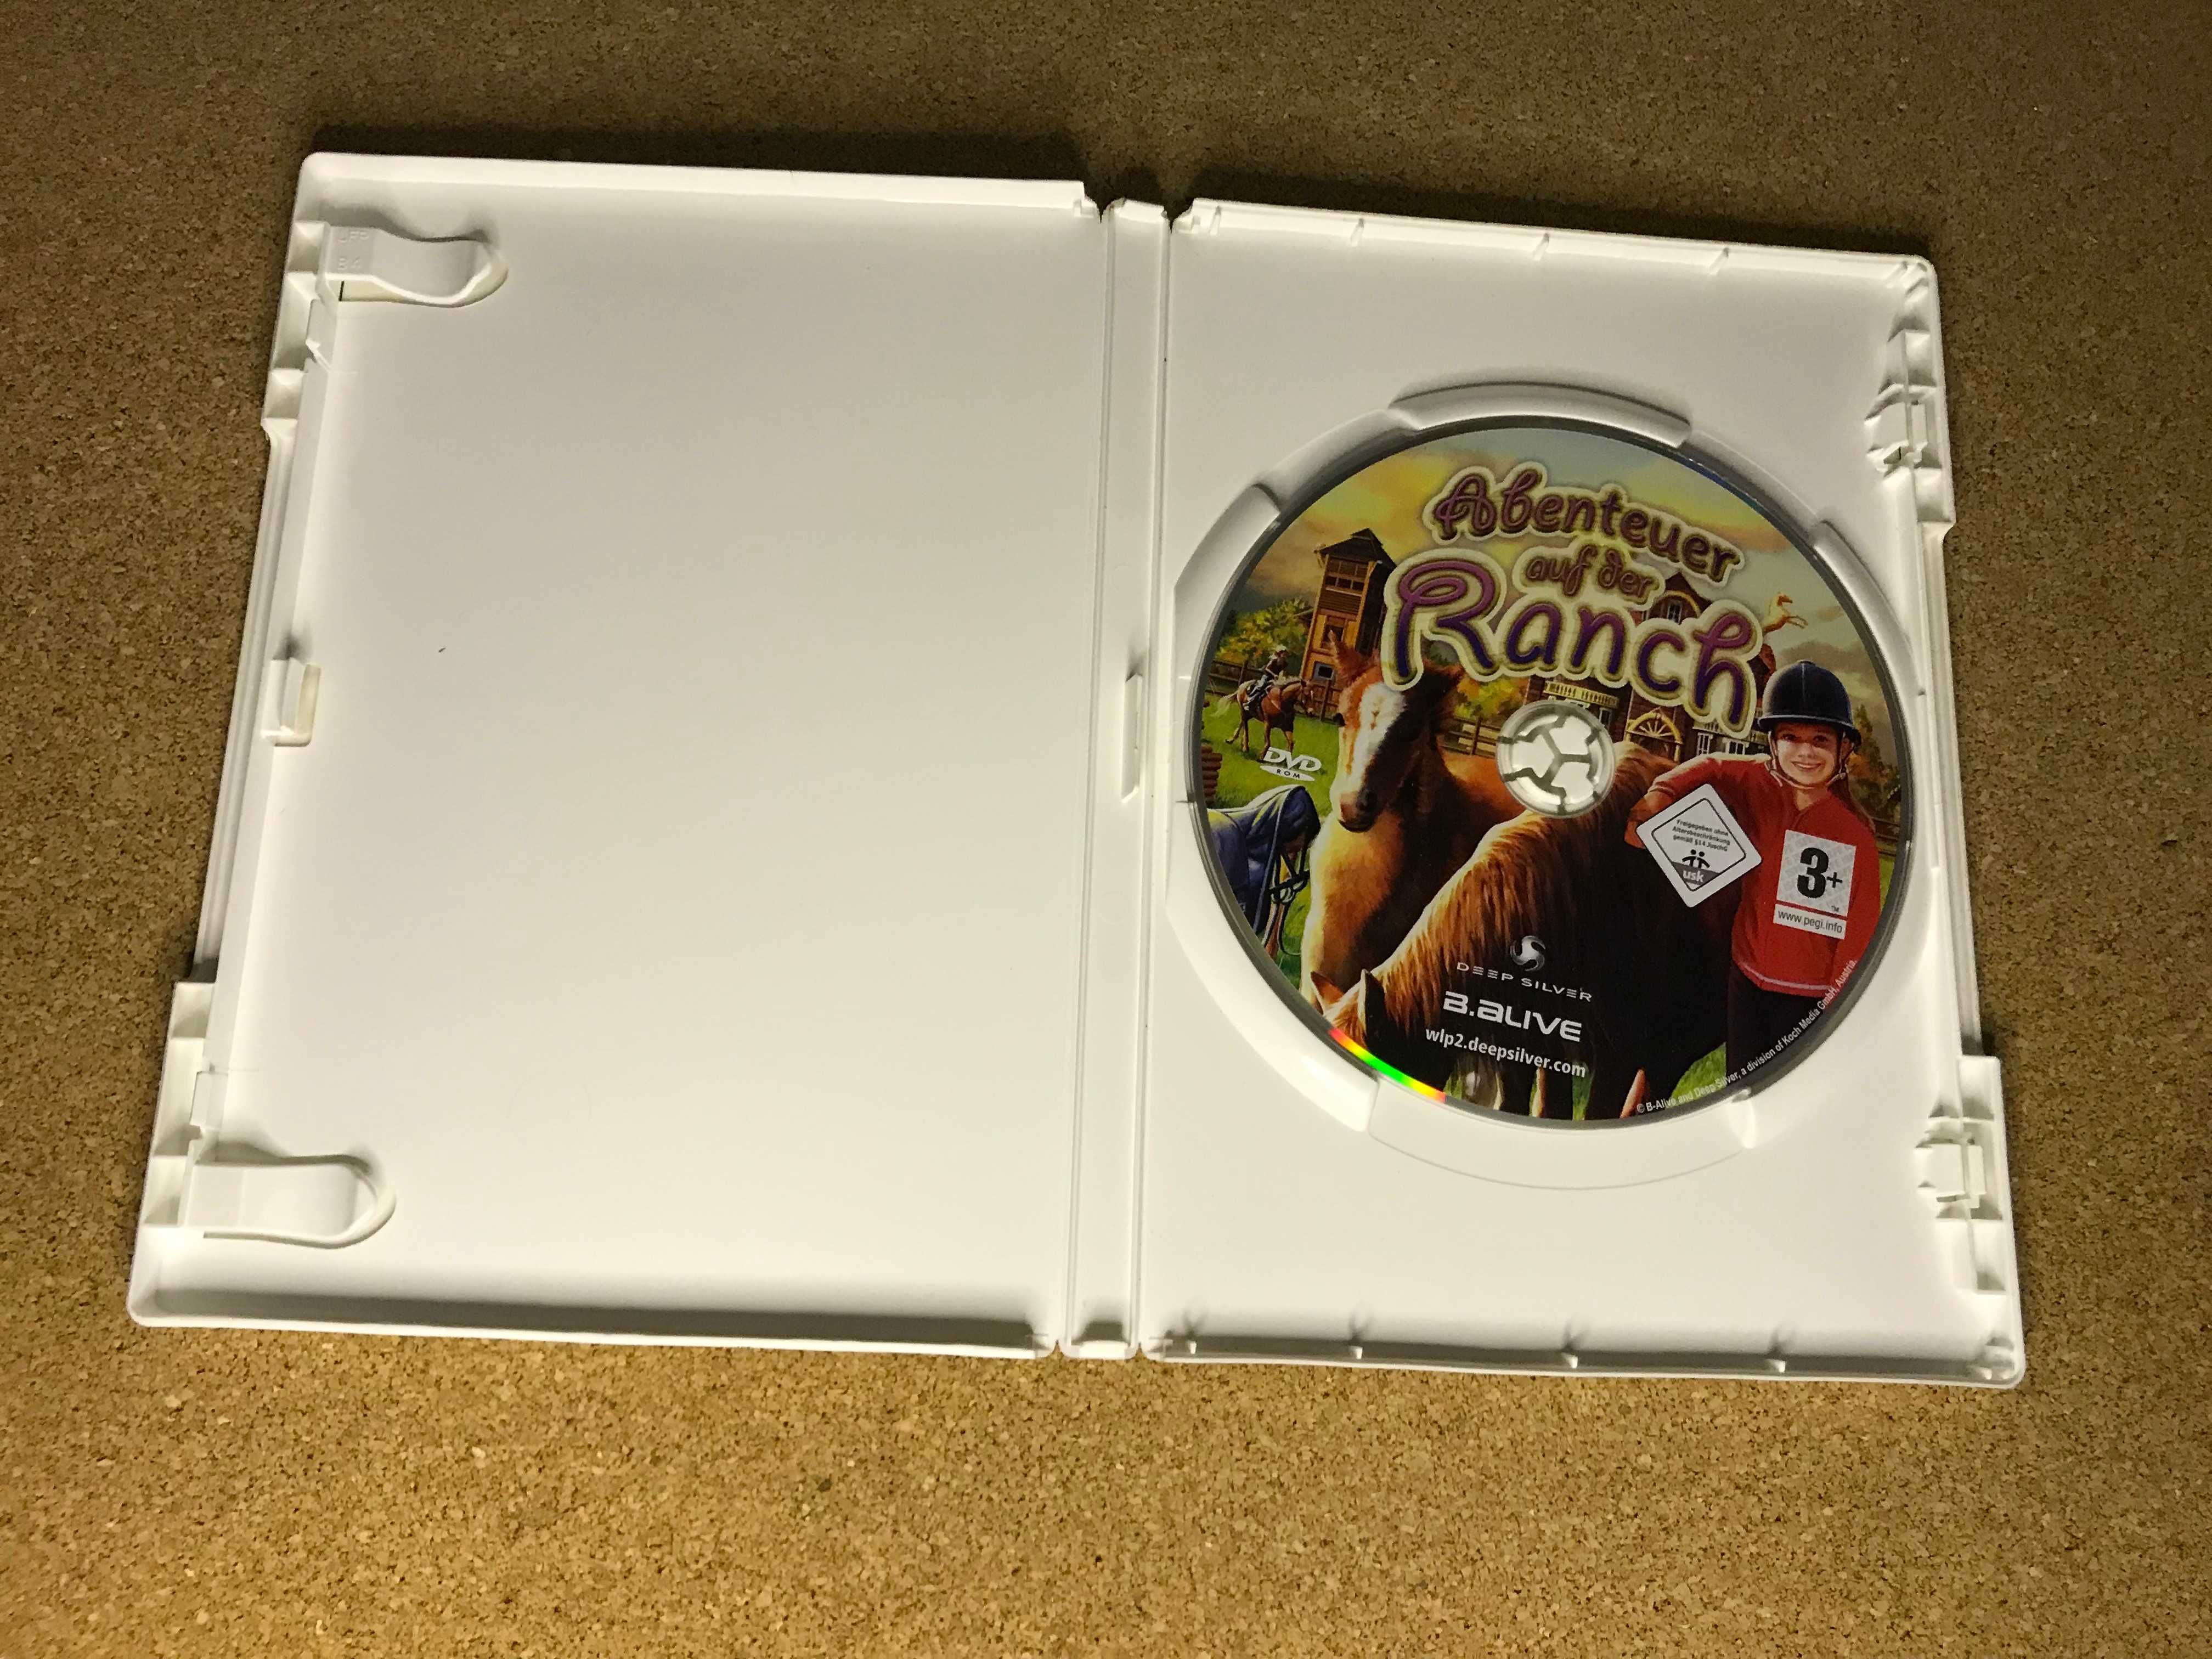 Abenteuer Auf Der Ranch - Przygody Na Ranczo - Konie [PC][DVD]